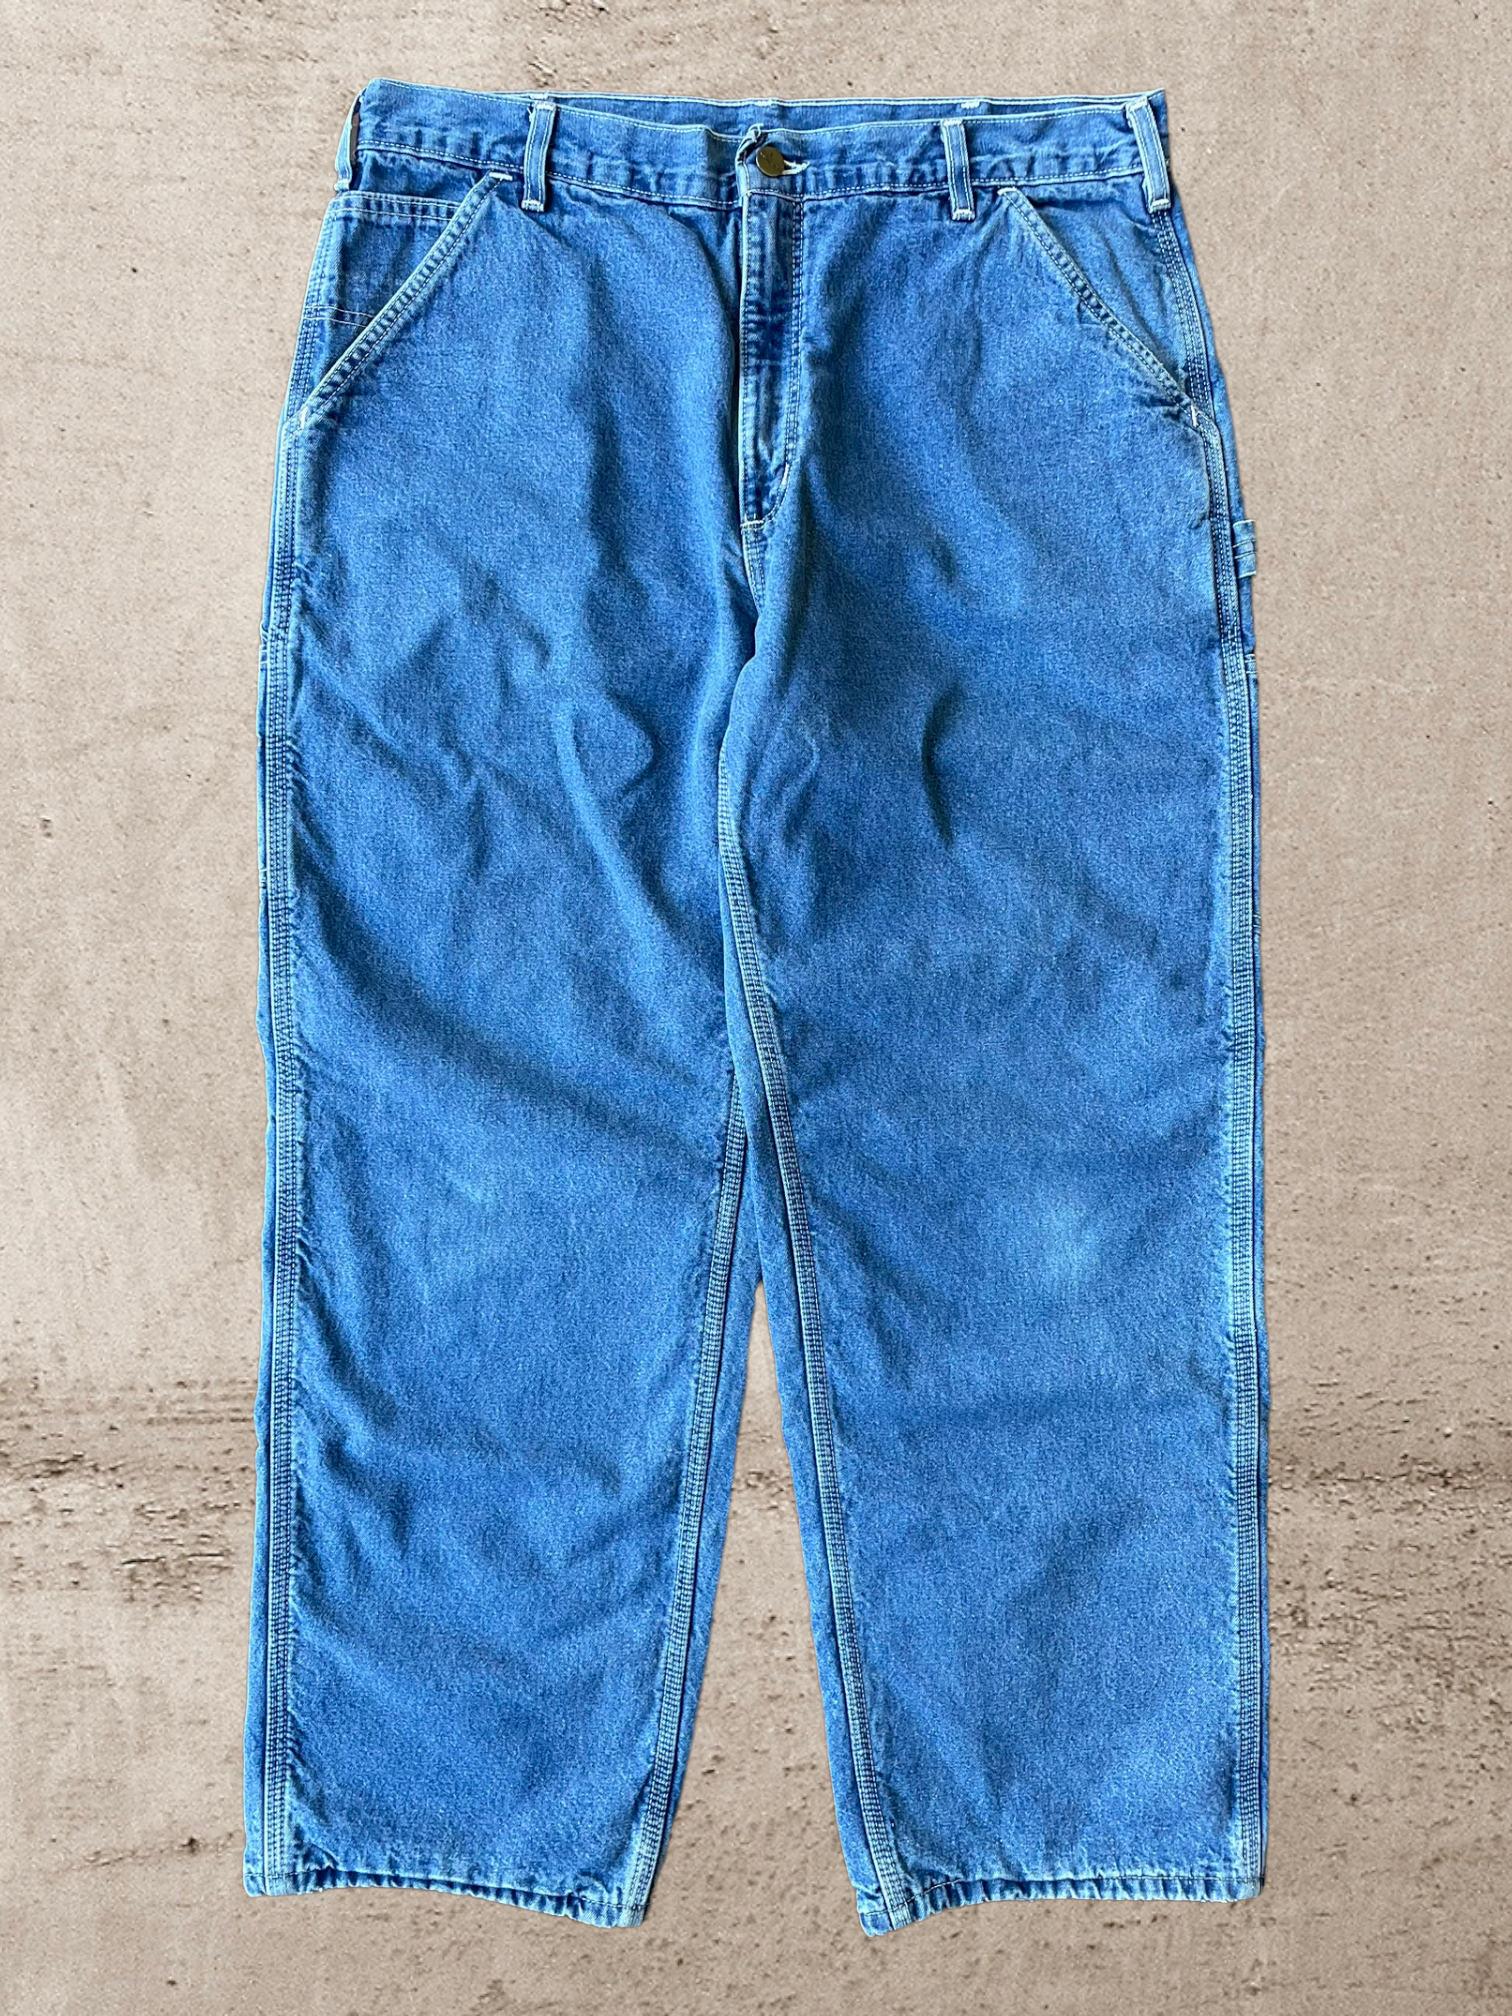 90s Carhartt Blanket Lined Carpenter Jeans- 36x29